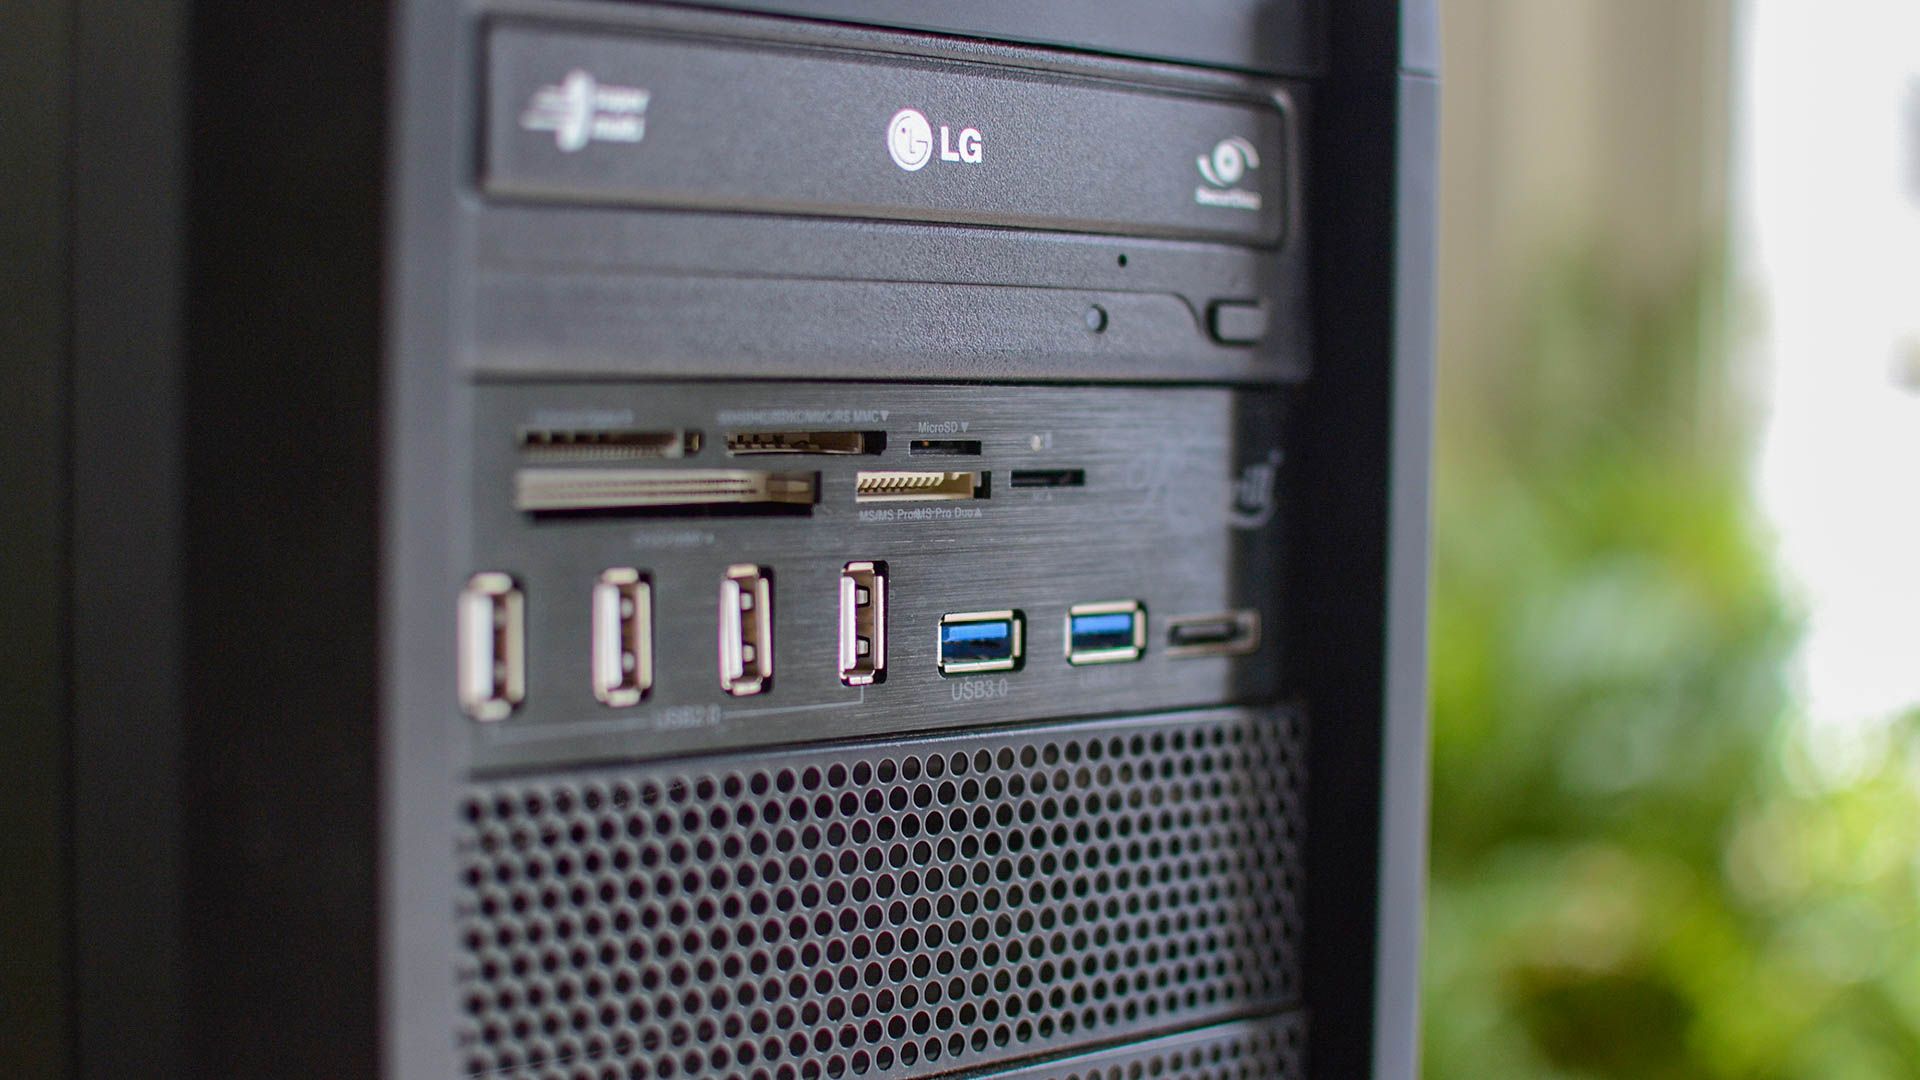 LG Desktop computer tower ports